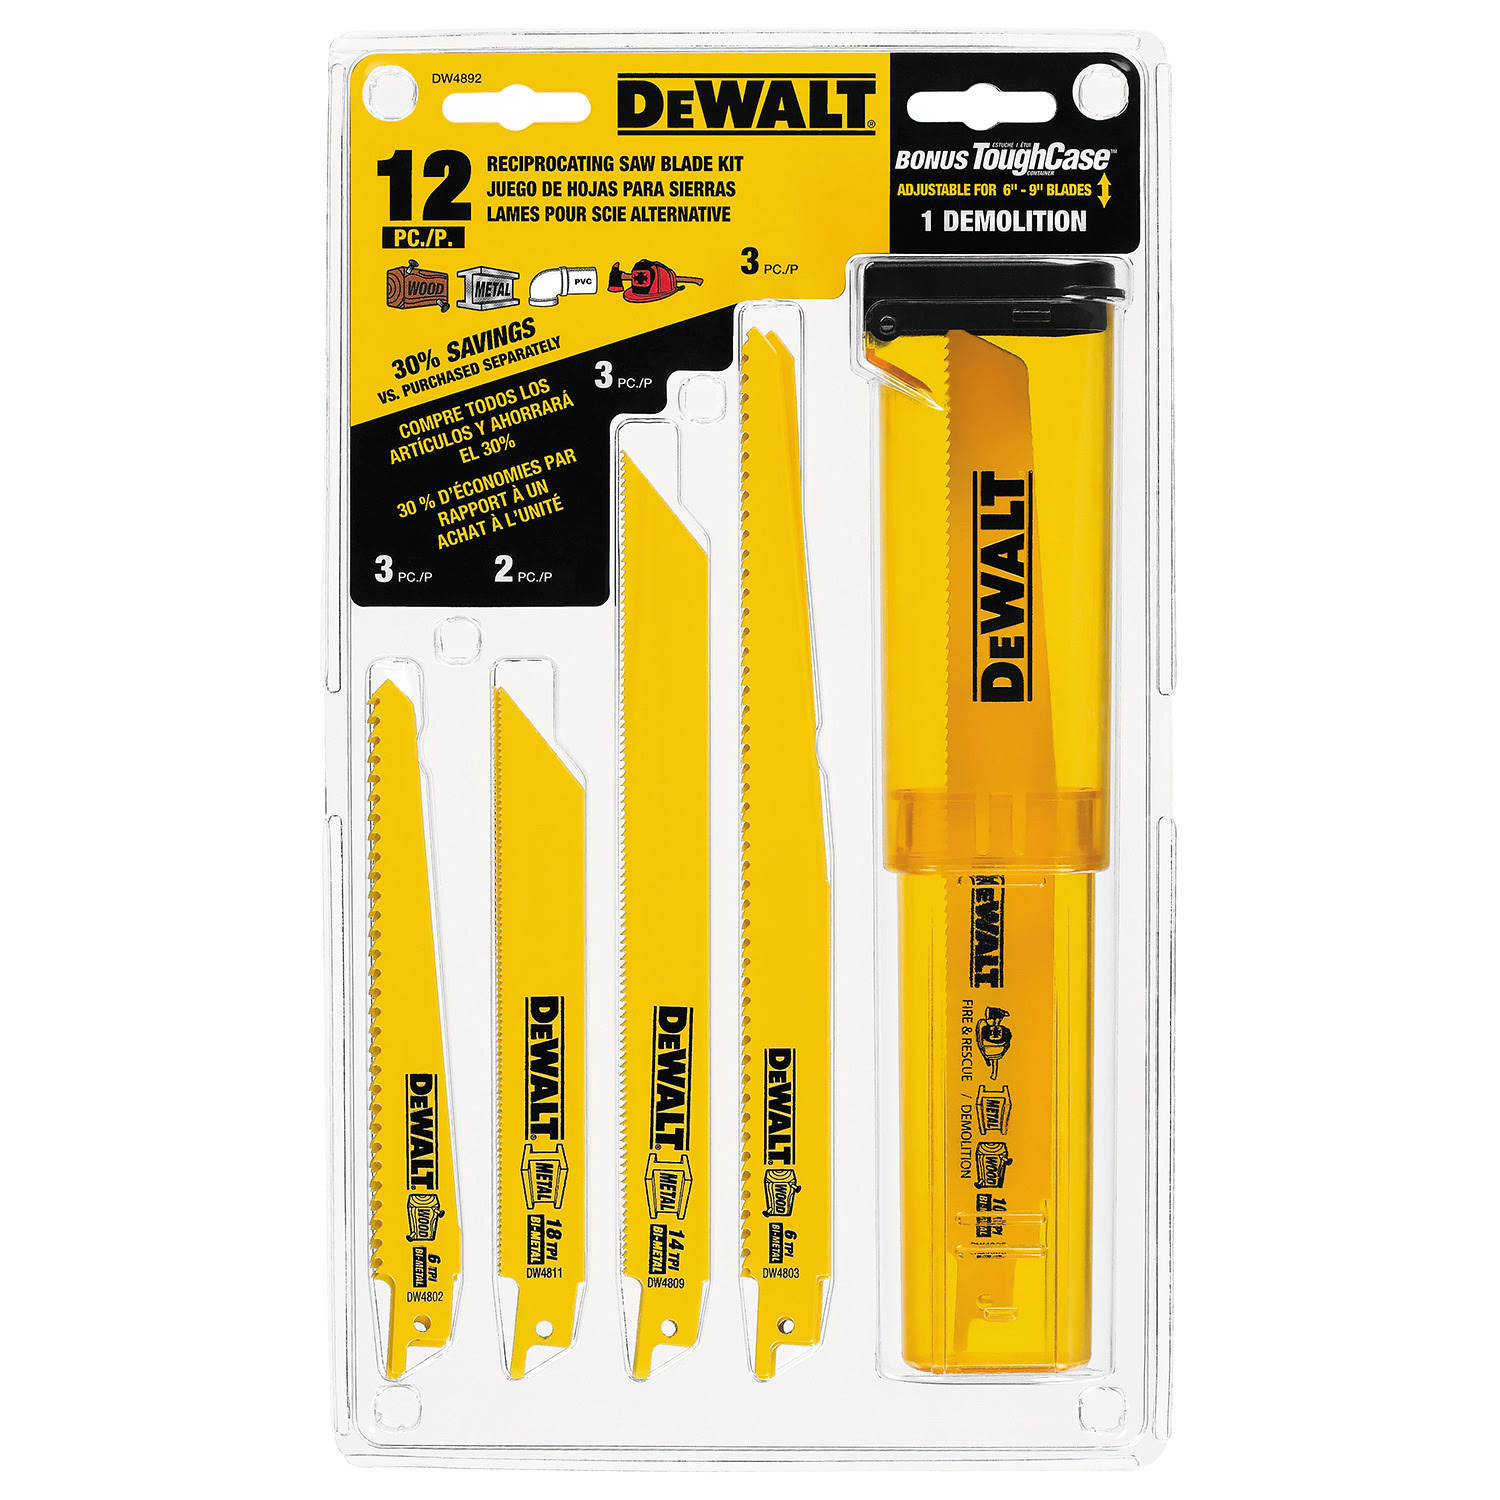 Dewalt DW4892 Reciprocating Saw Blade Set - with Case, 12pcs